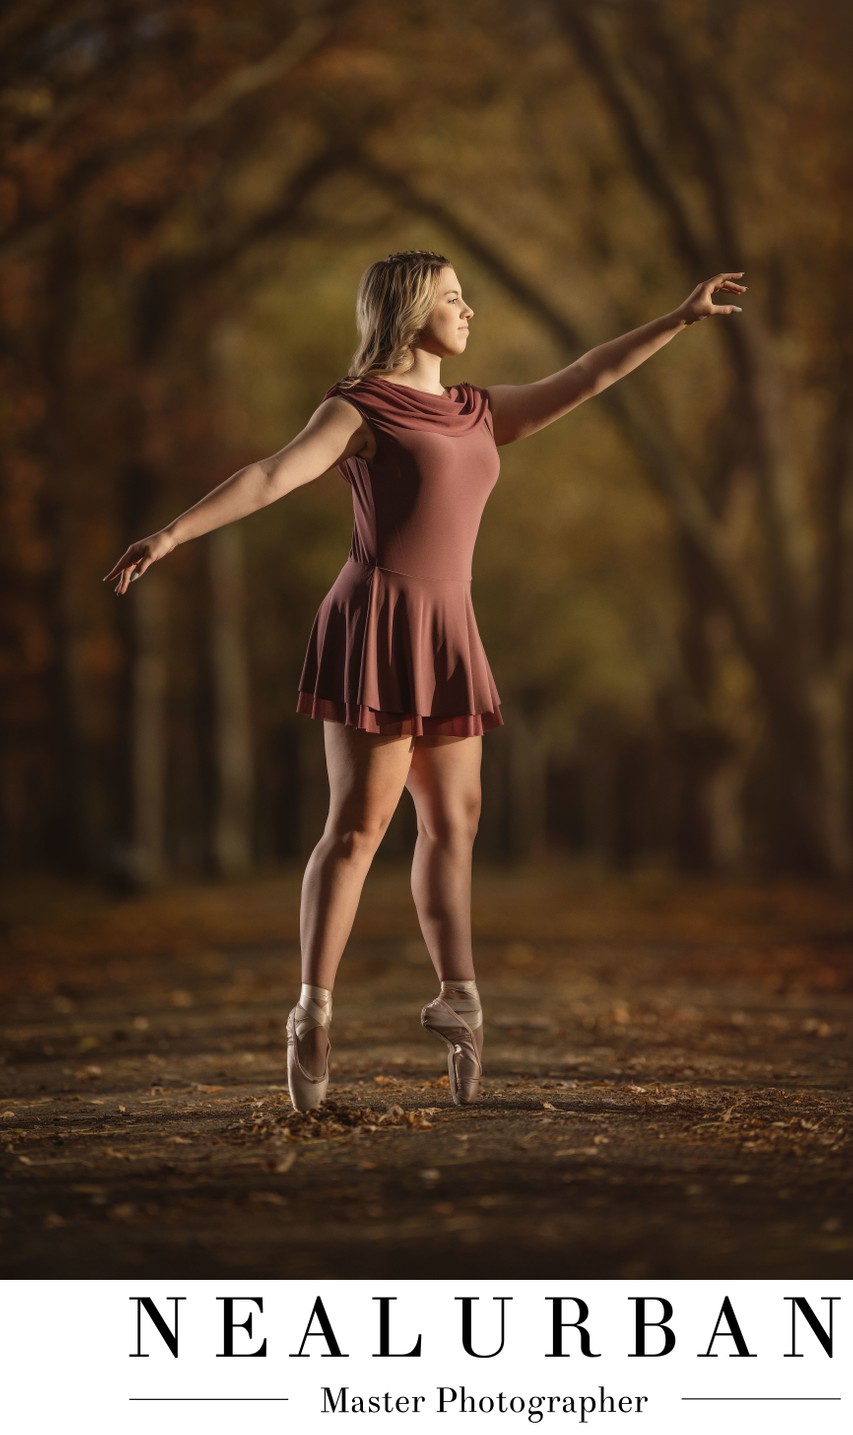 Ballet Dancer in Fort Niagara State Park